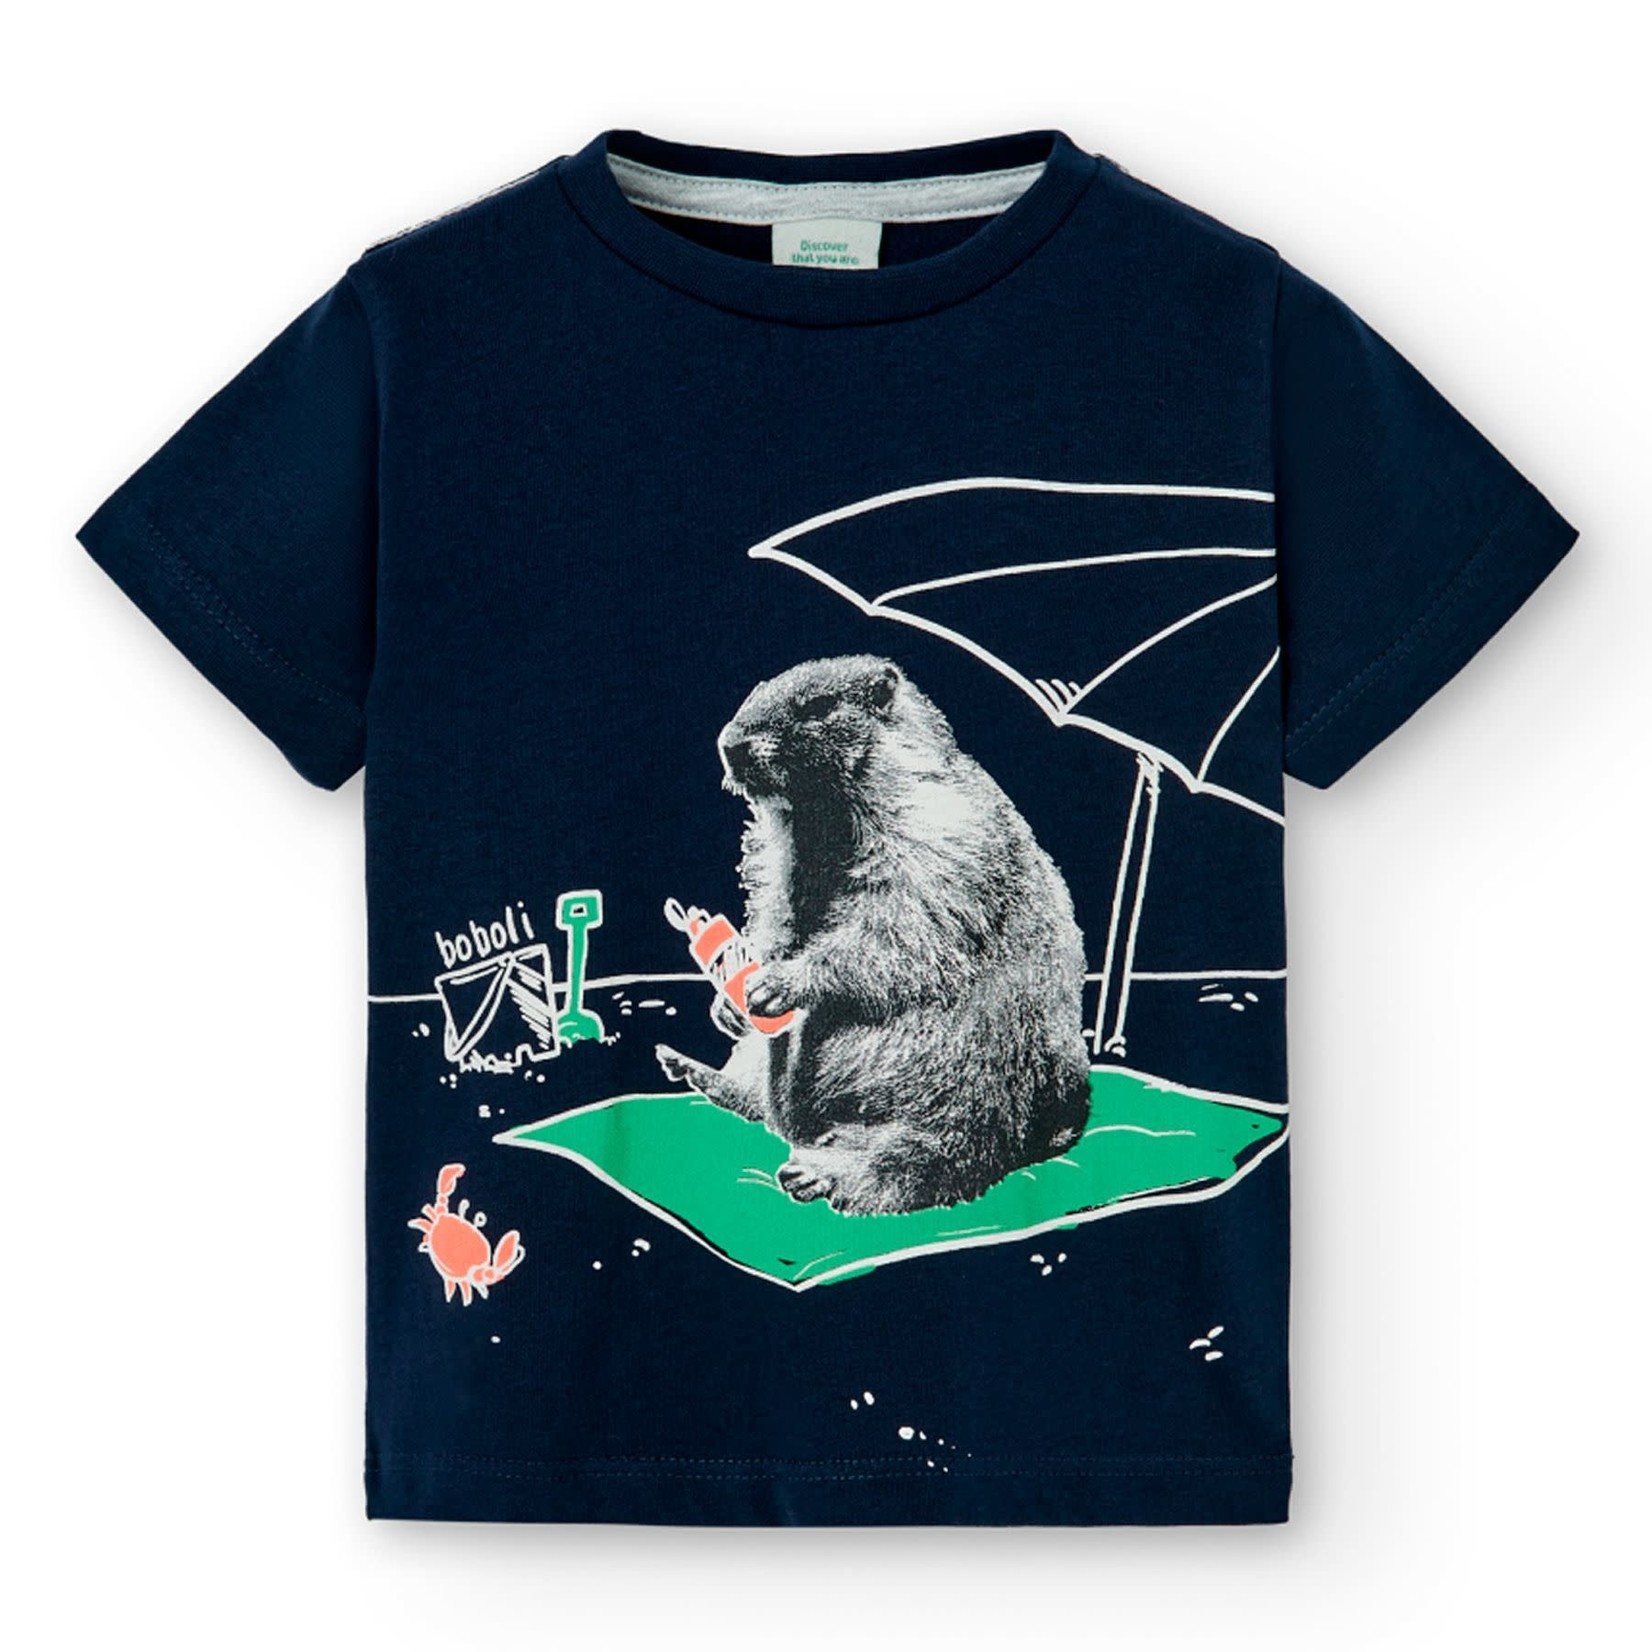 Boboli BOBOLI - Navy blue T-shirt with a groundhog on the beach print